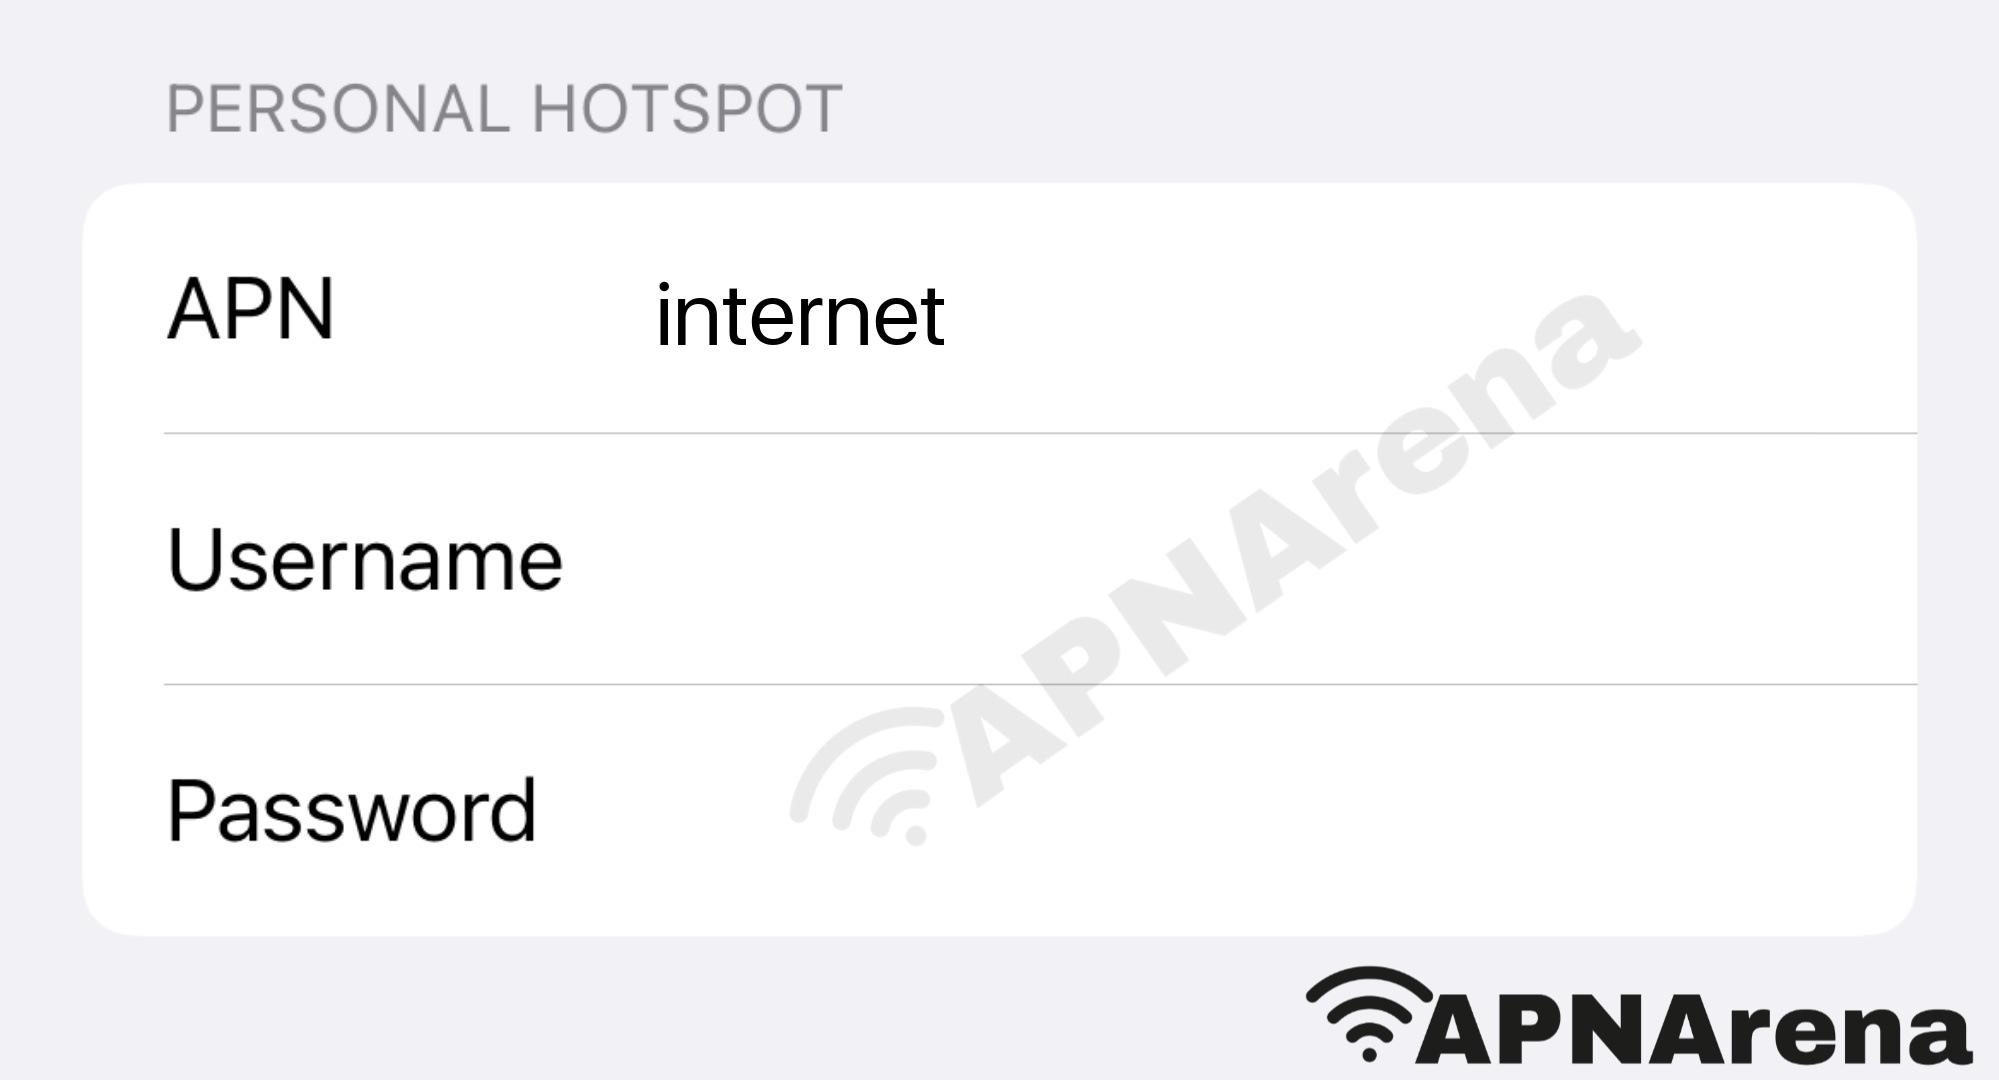 Intertelecom Personal Hotspot Settings for iPhone